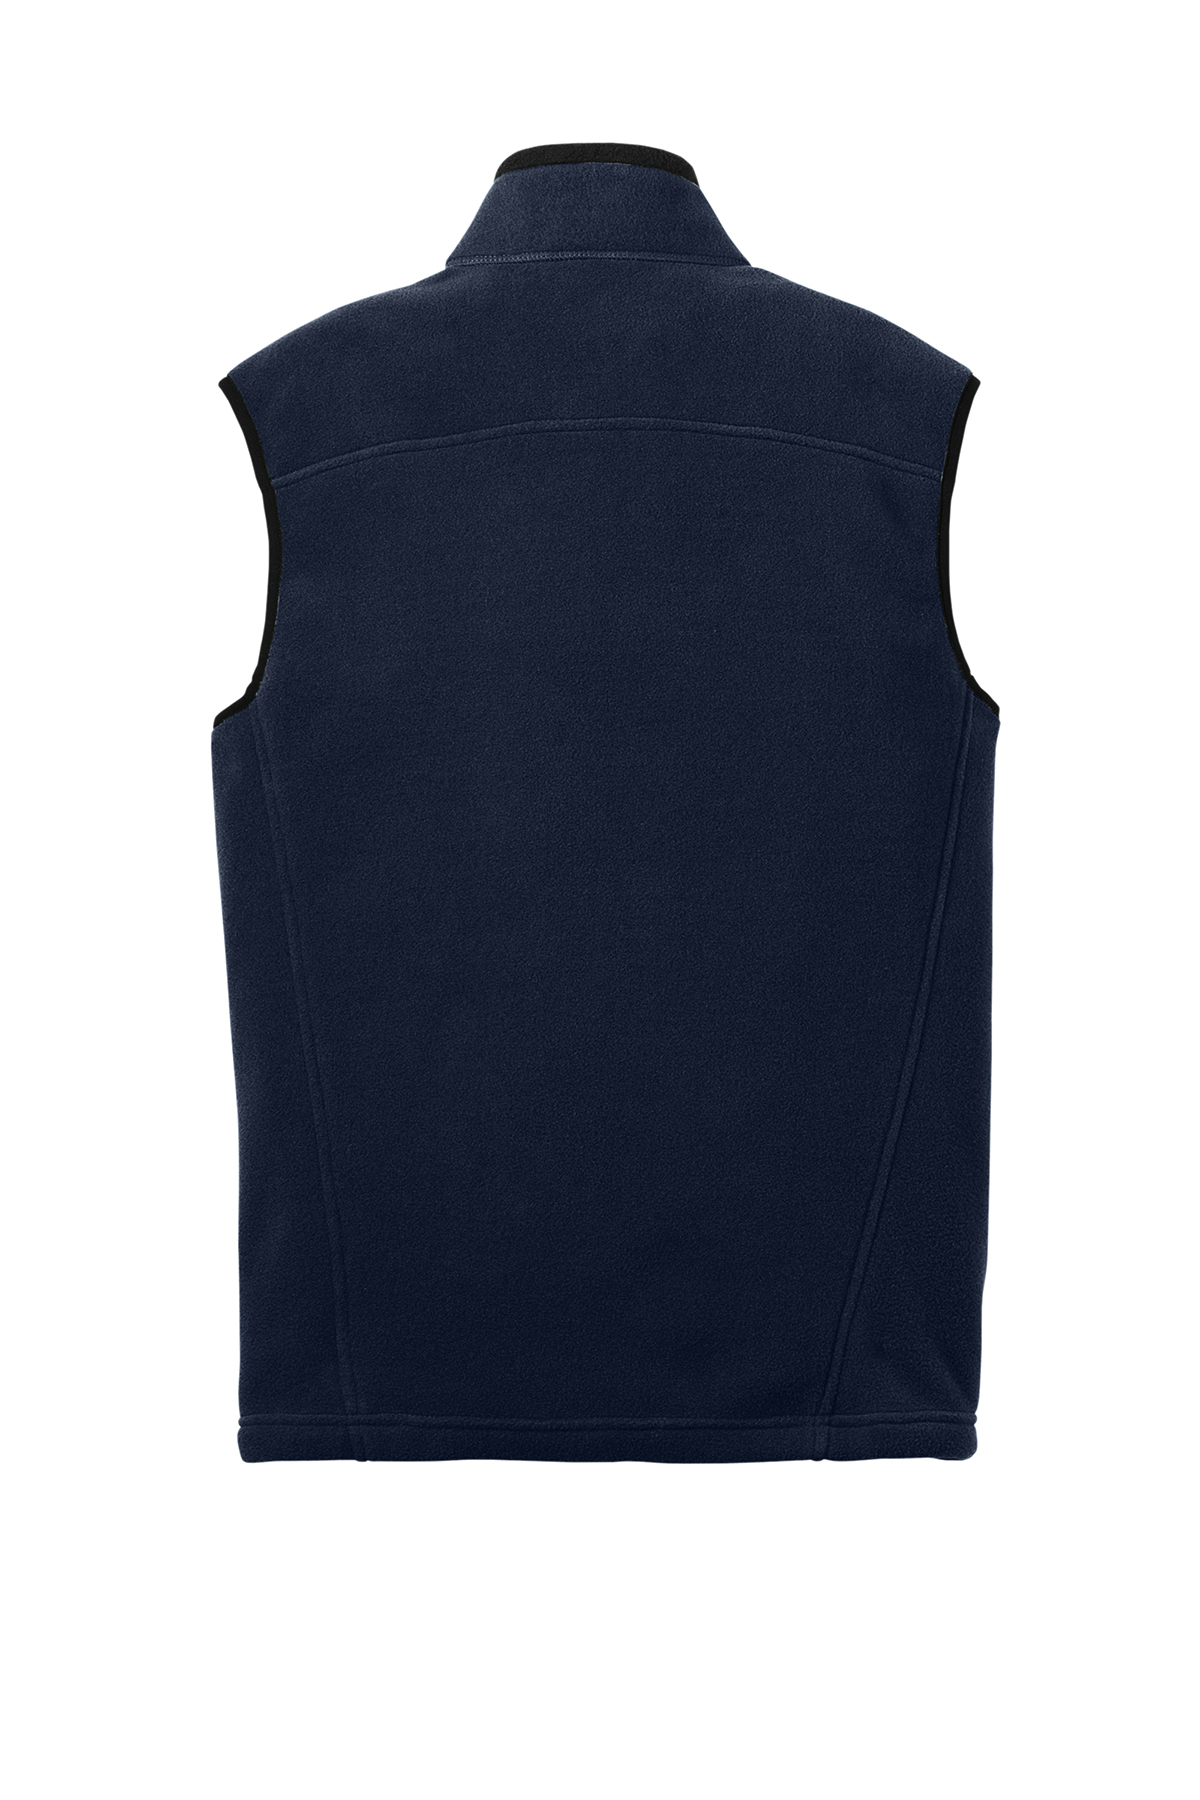 Eddie Bauer - Fleece Vest | Product | Company Casuals